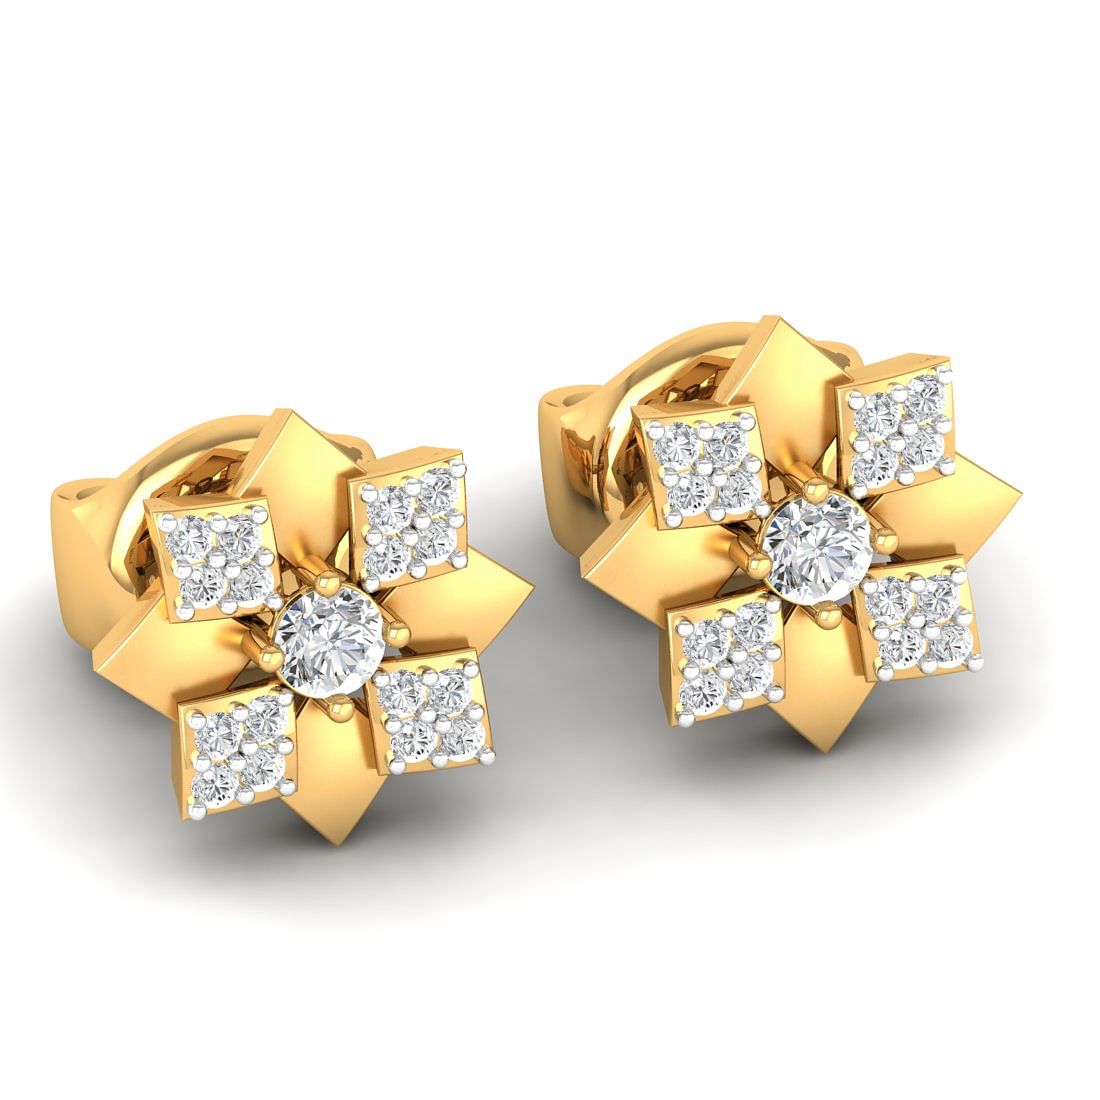 18k Yellow Gold Fuscia Diamond Earrings For Anniversary Gift